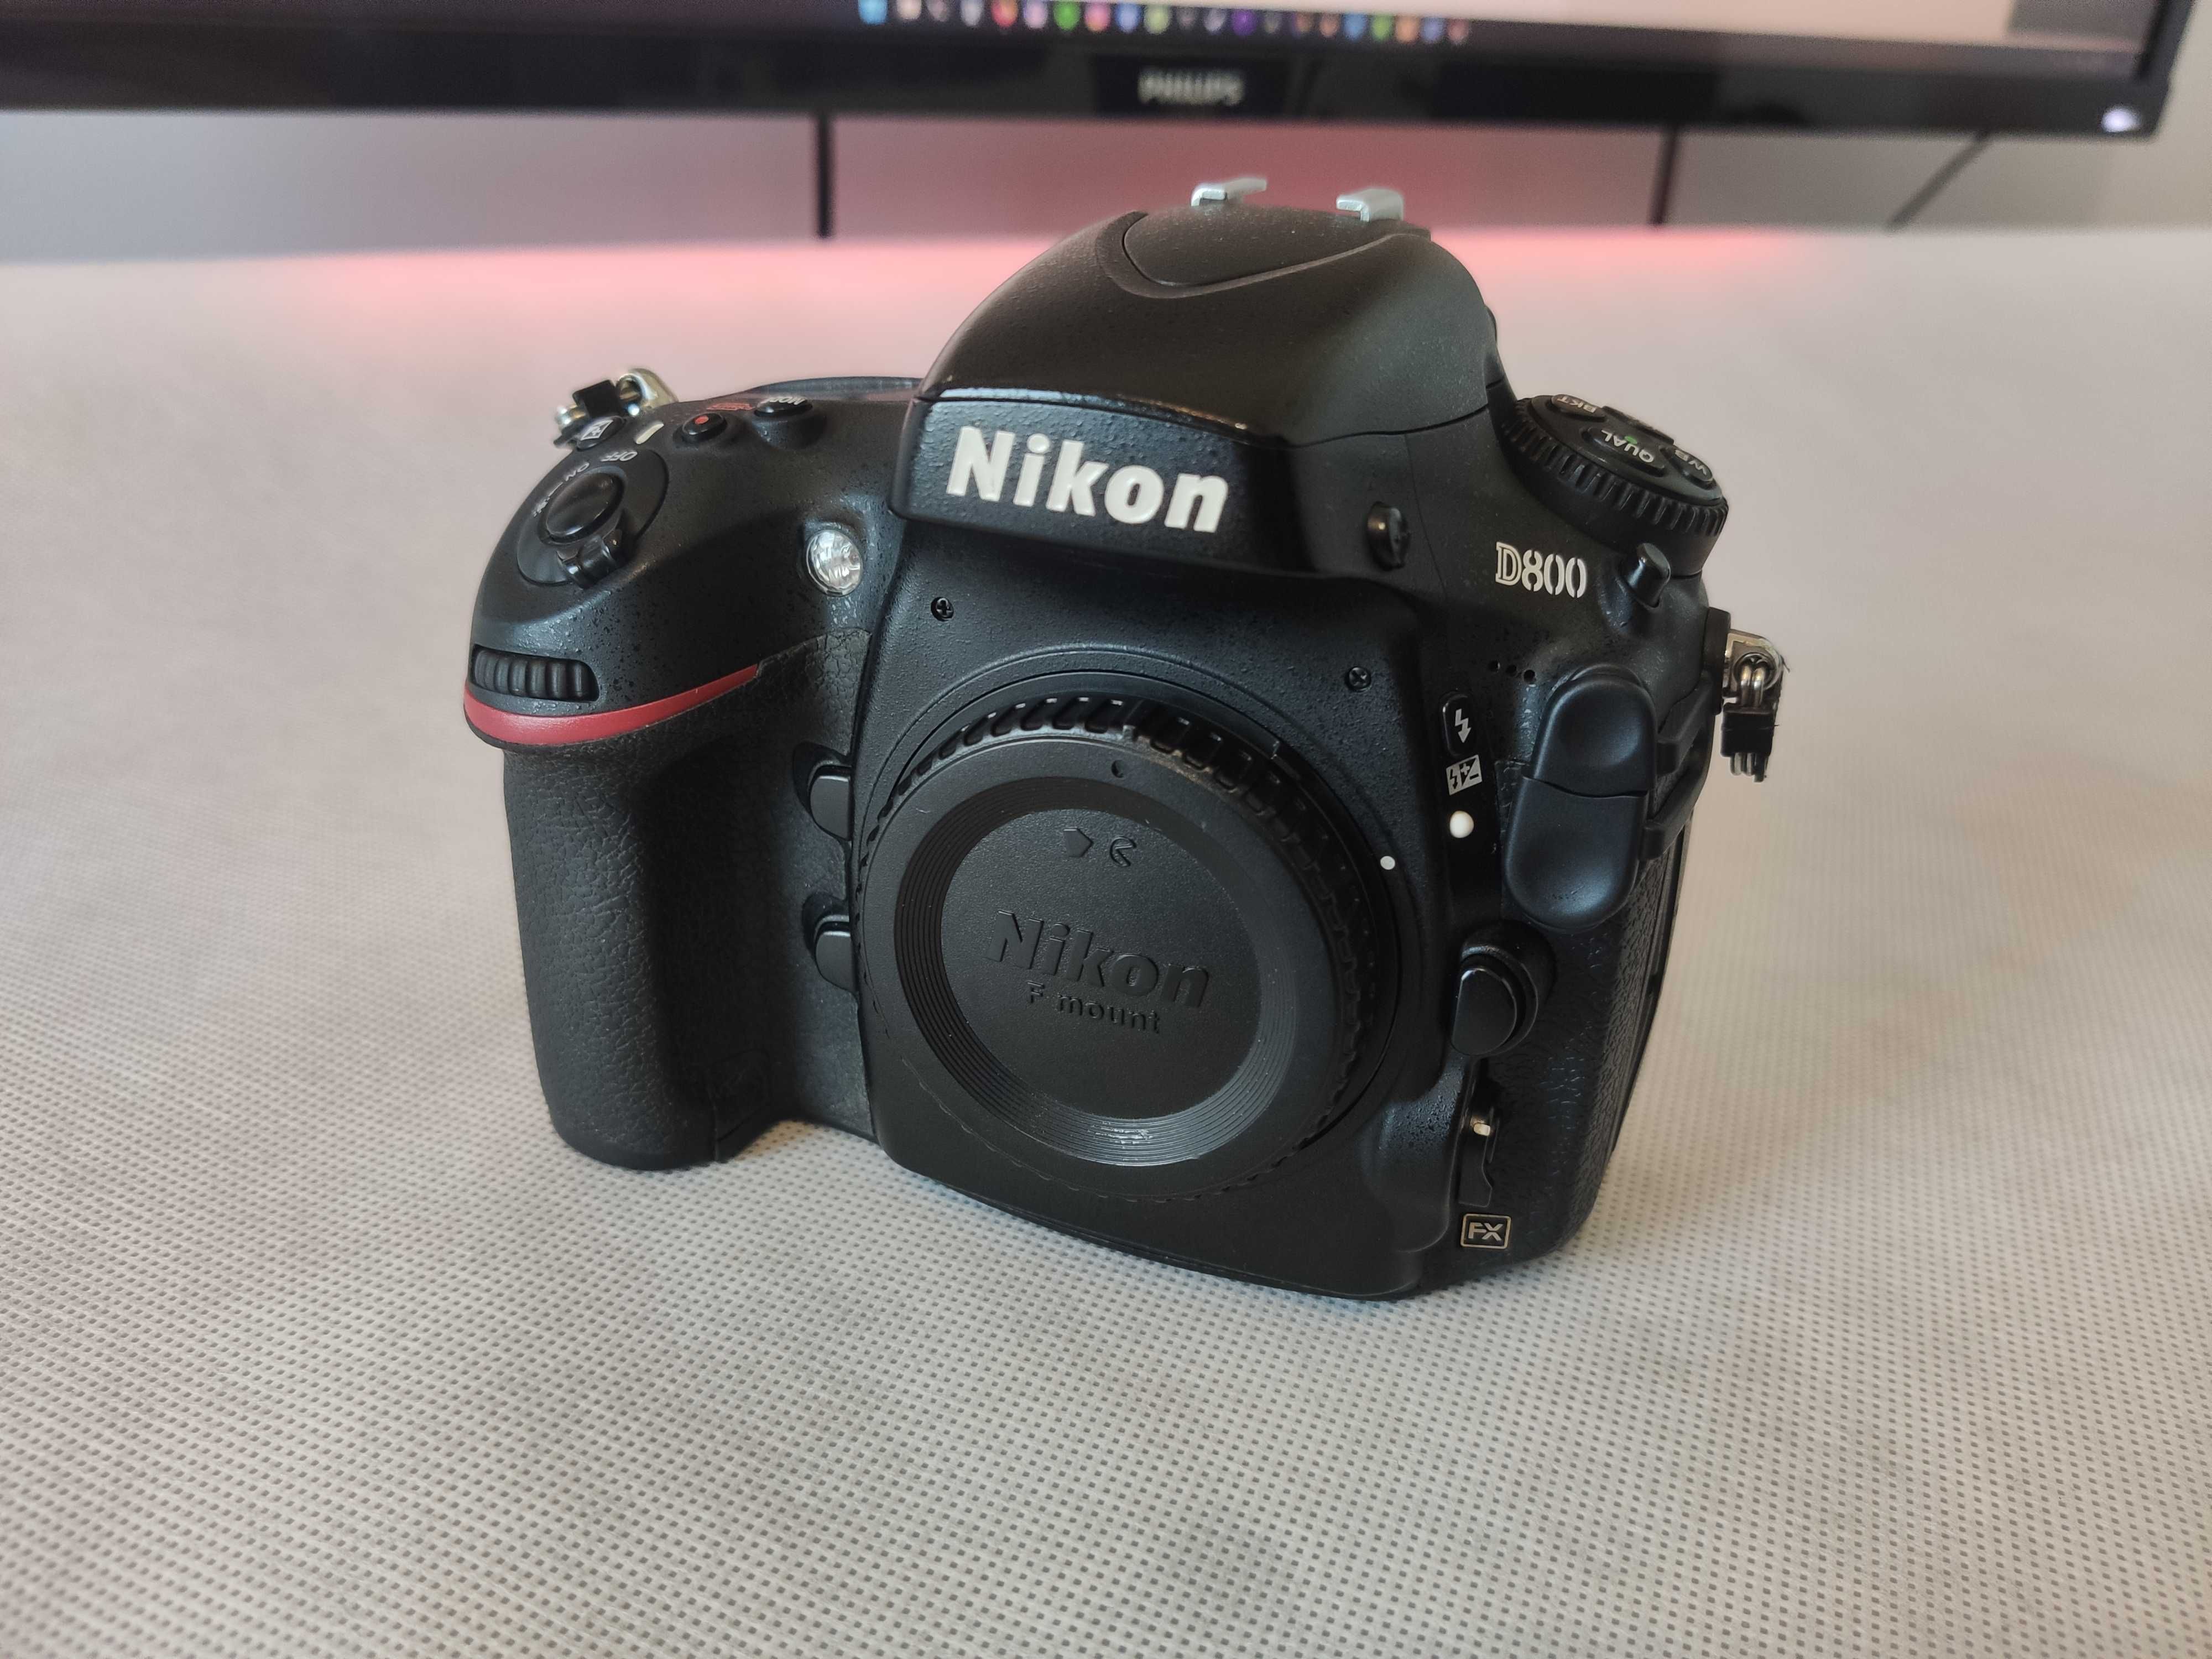 Nikon D800 + Nikkor 50mm 1.8D